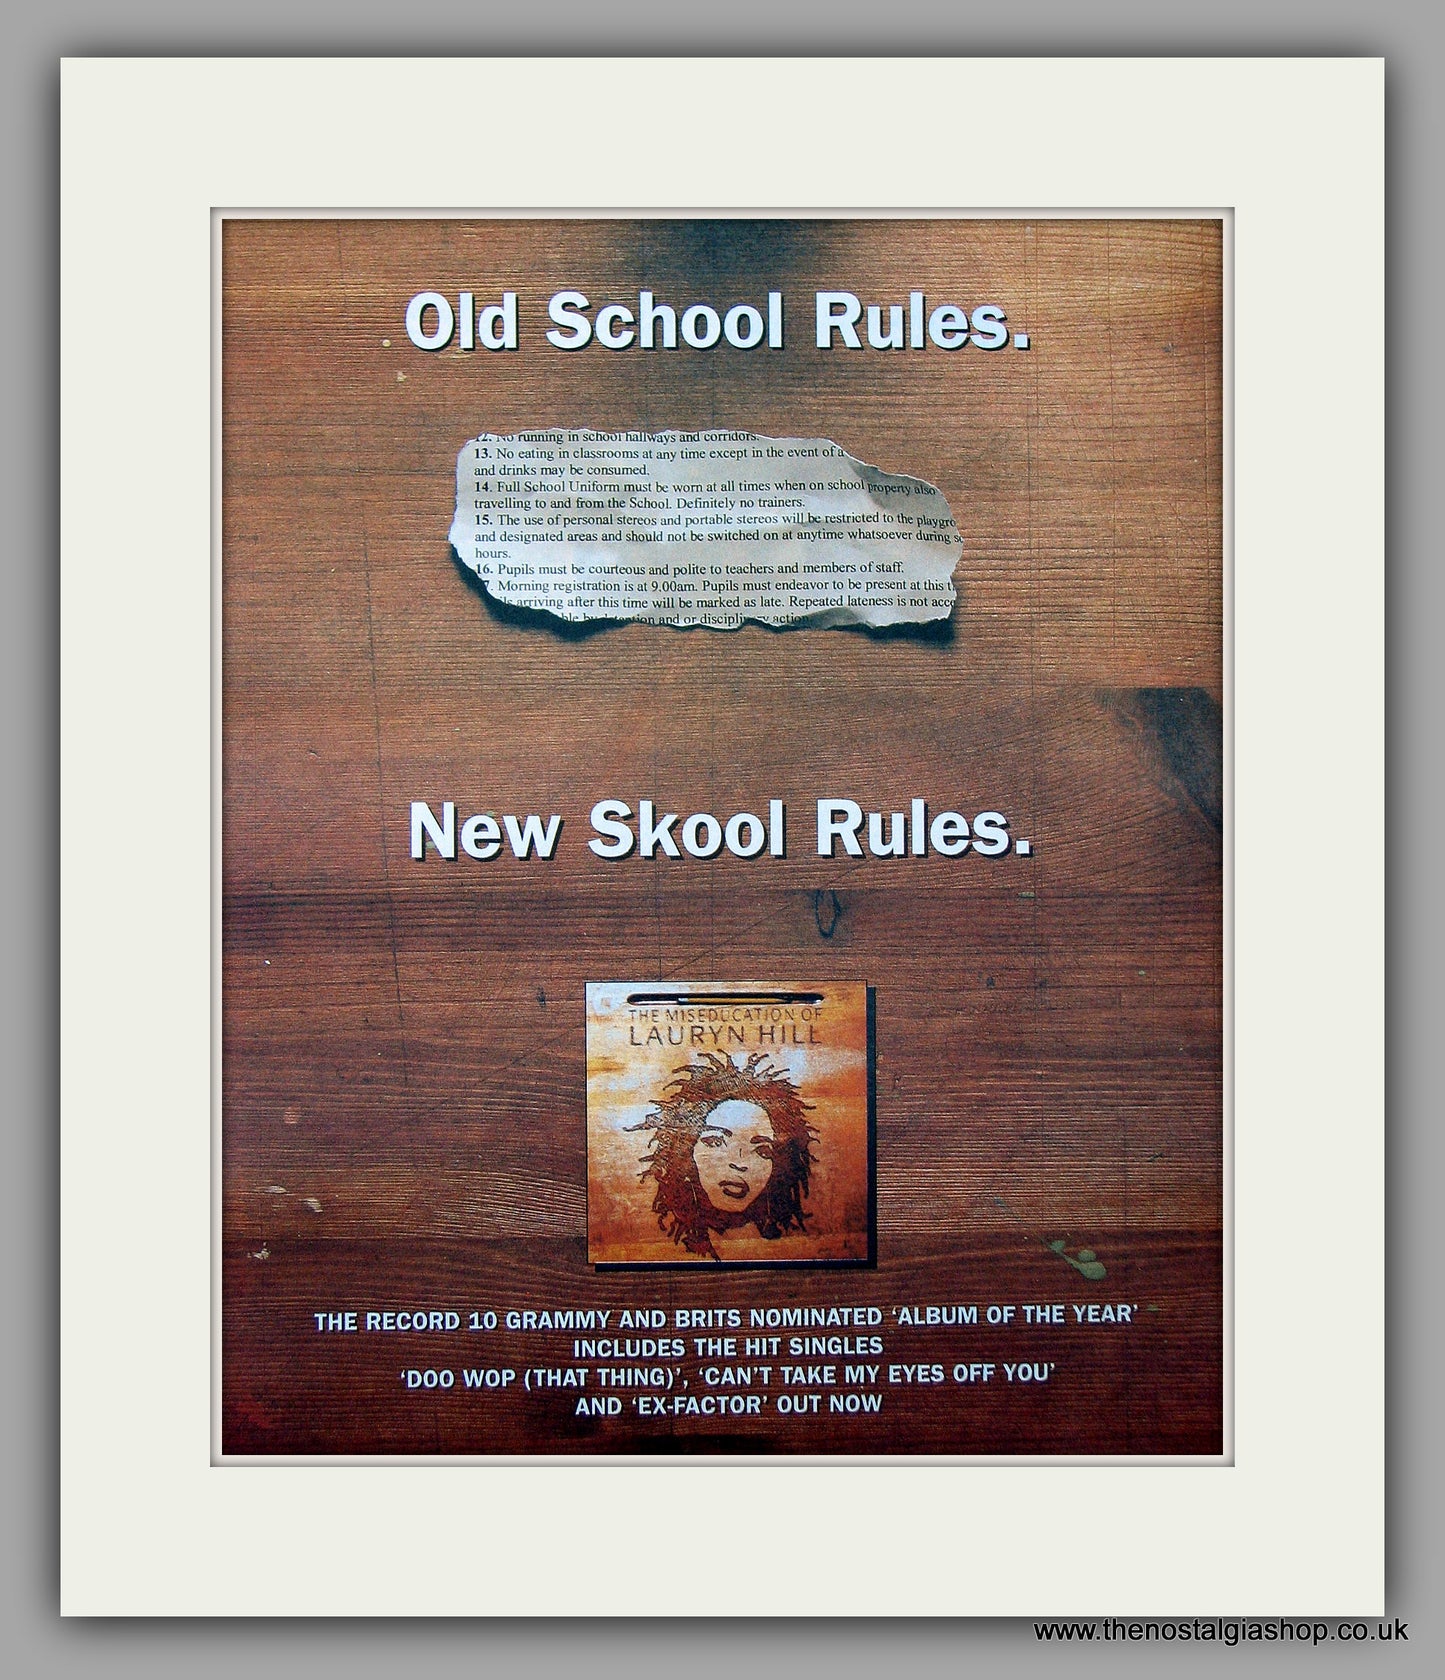 Lauryn Hill - Old School Rules. Original Vintage Advert 1999 (ref AD10861)